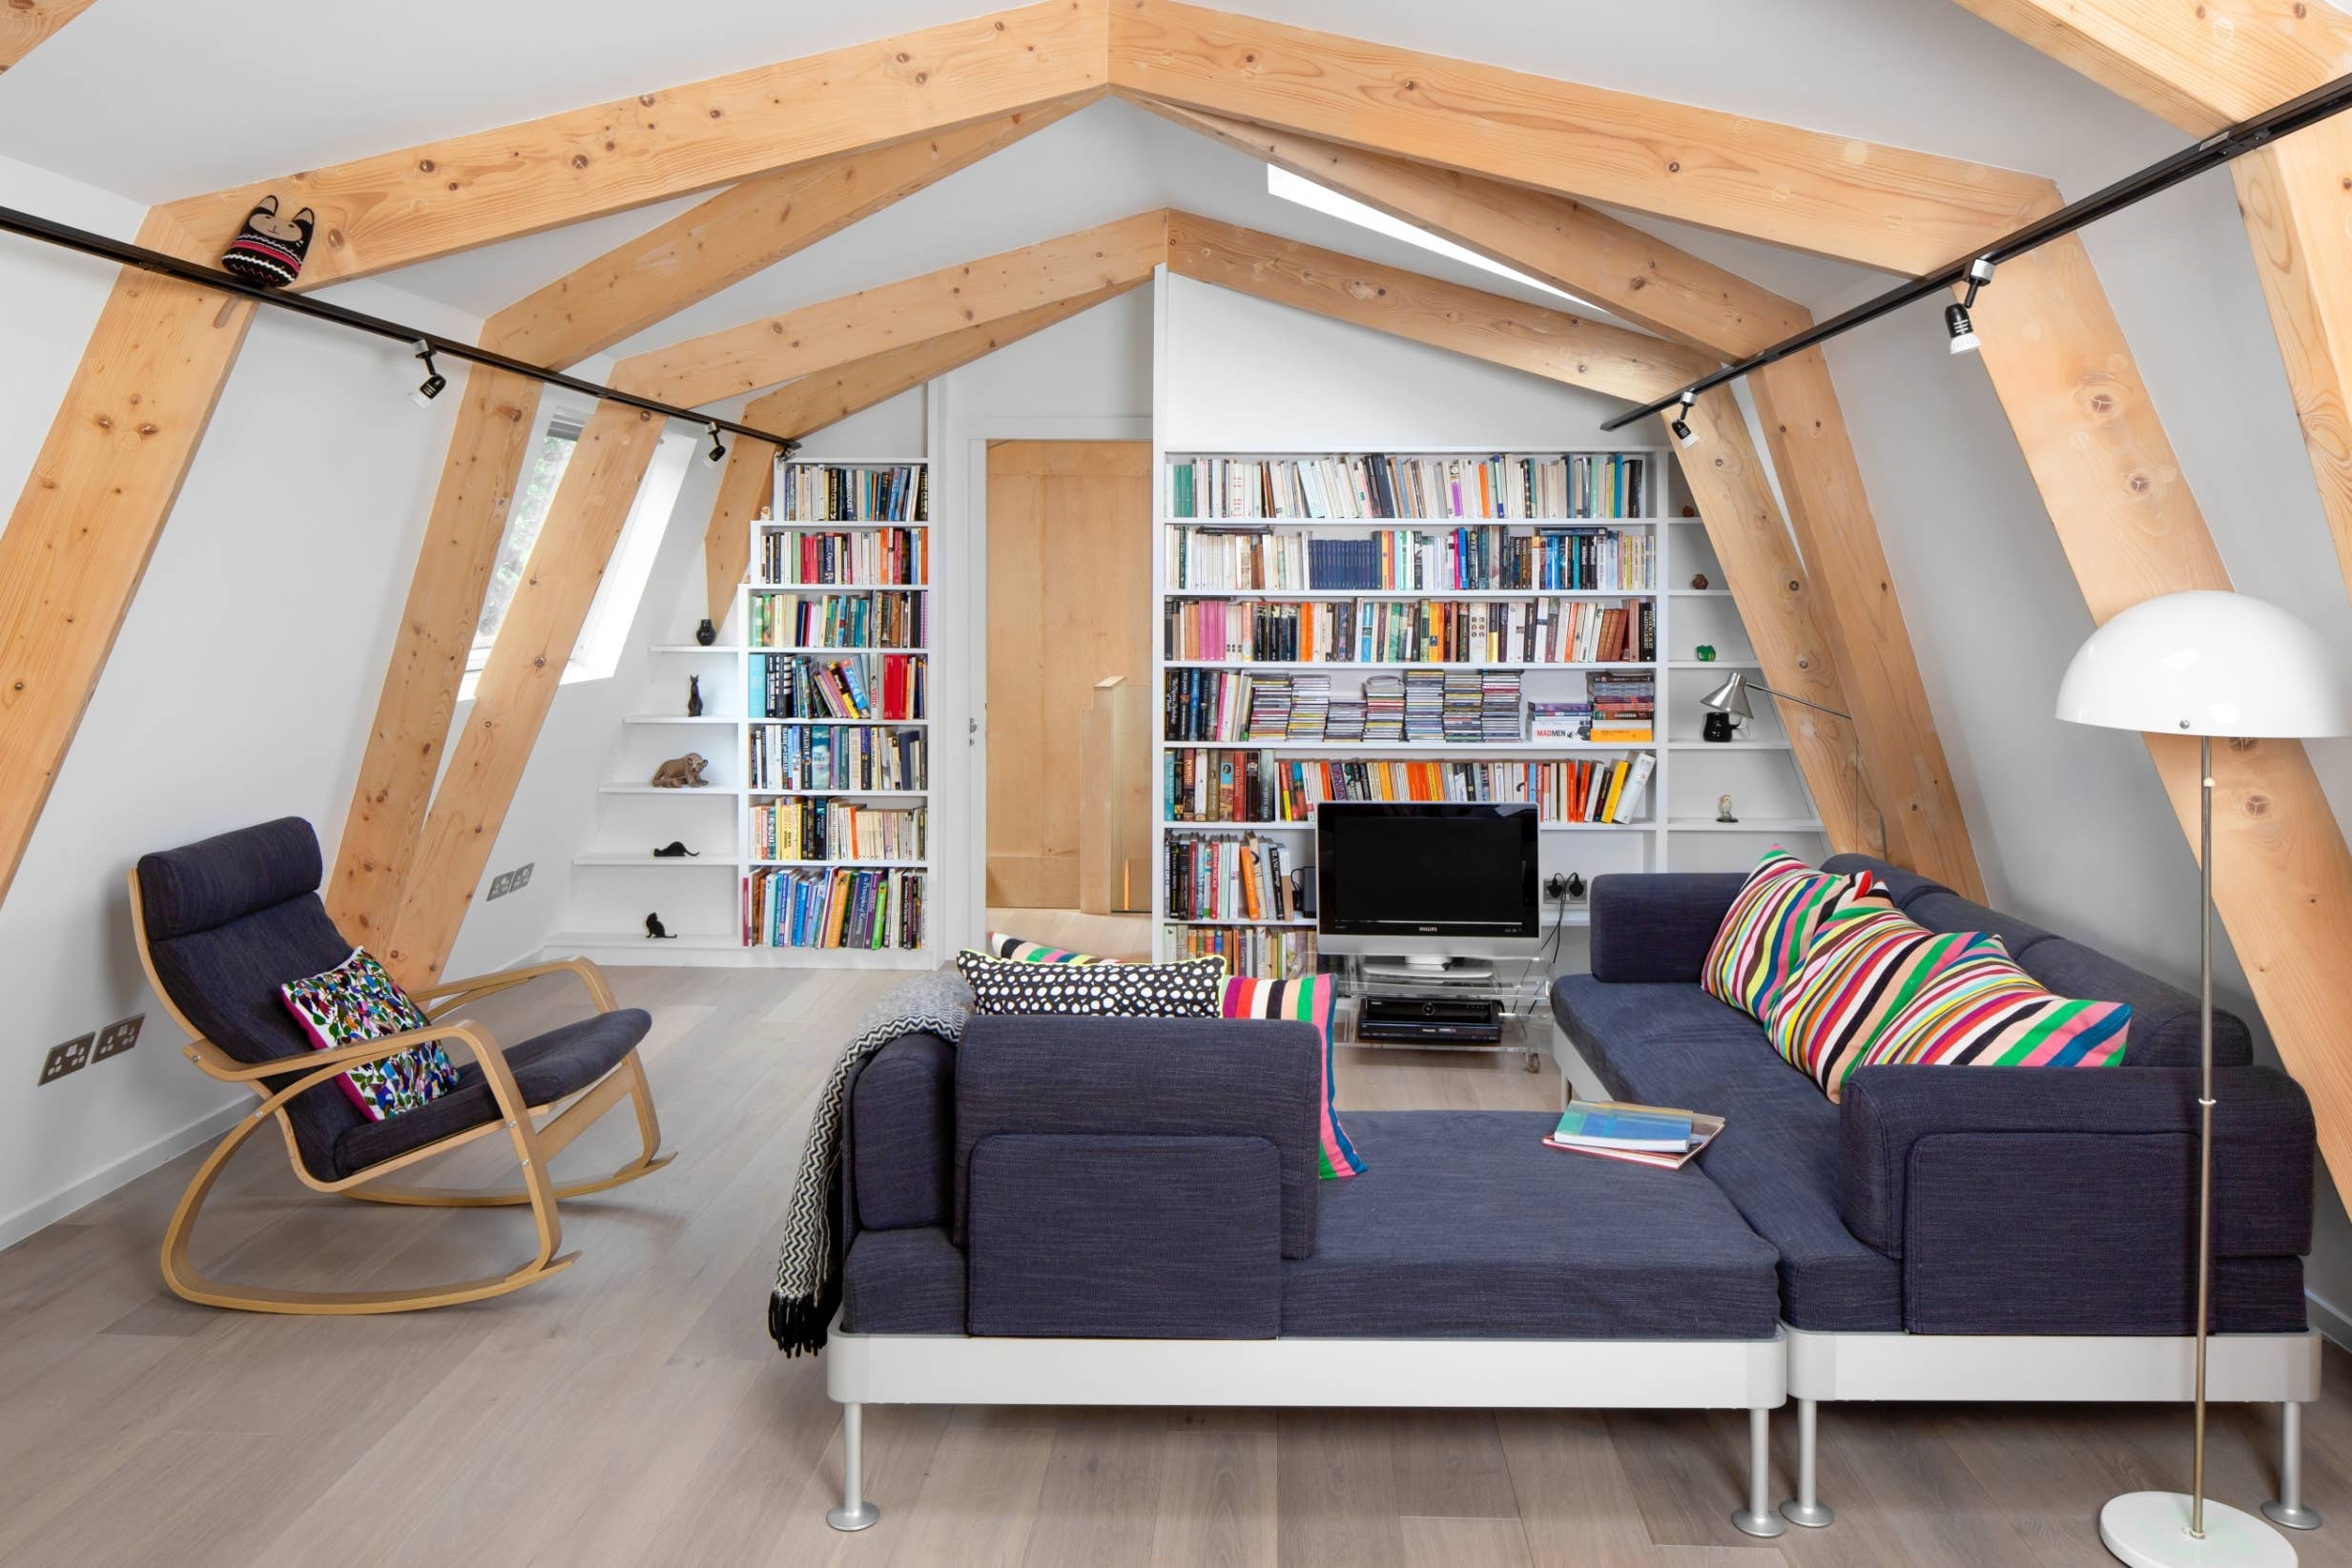 Interesting attic room - small library